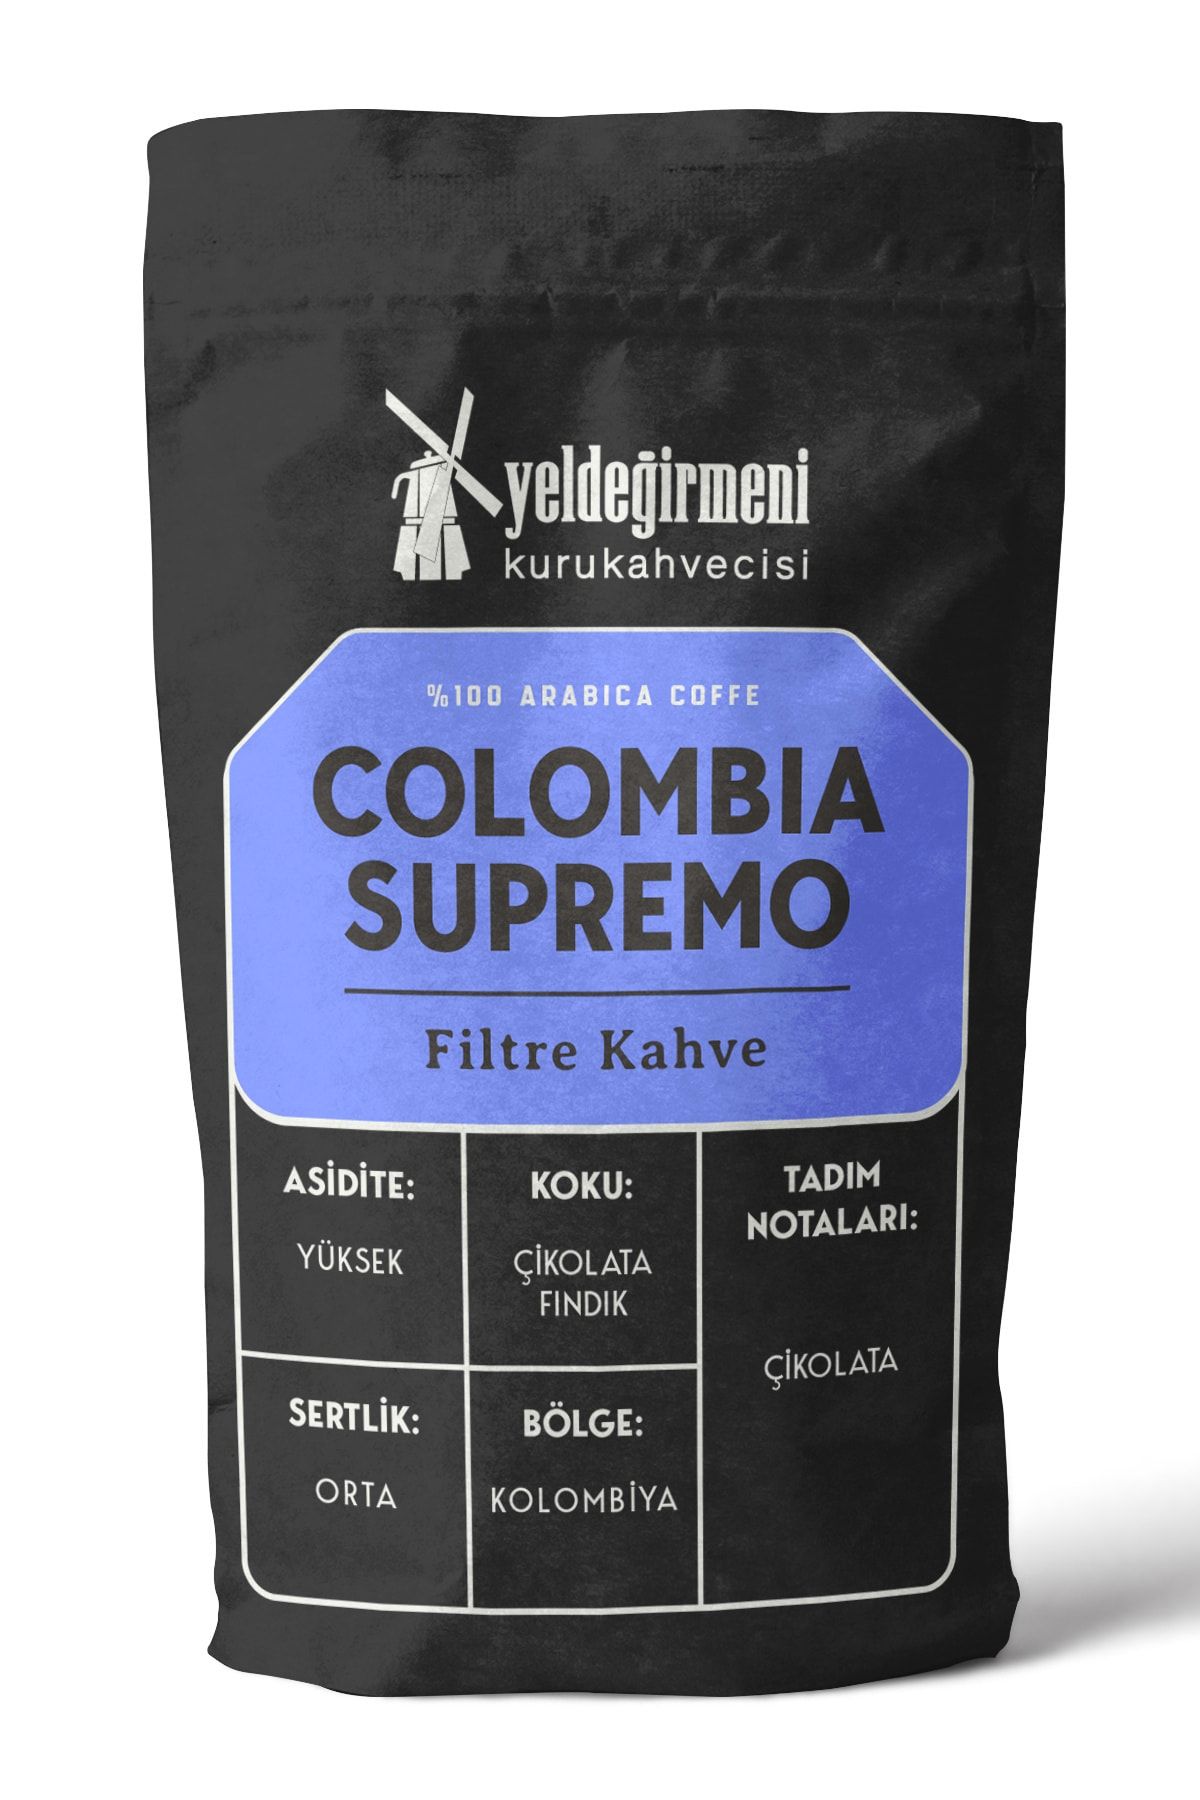 Yeldeğirmeni Kurukahvecisi Colombia Supremo Filtre Kahve 1000 gr